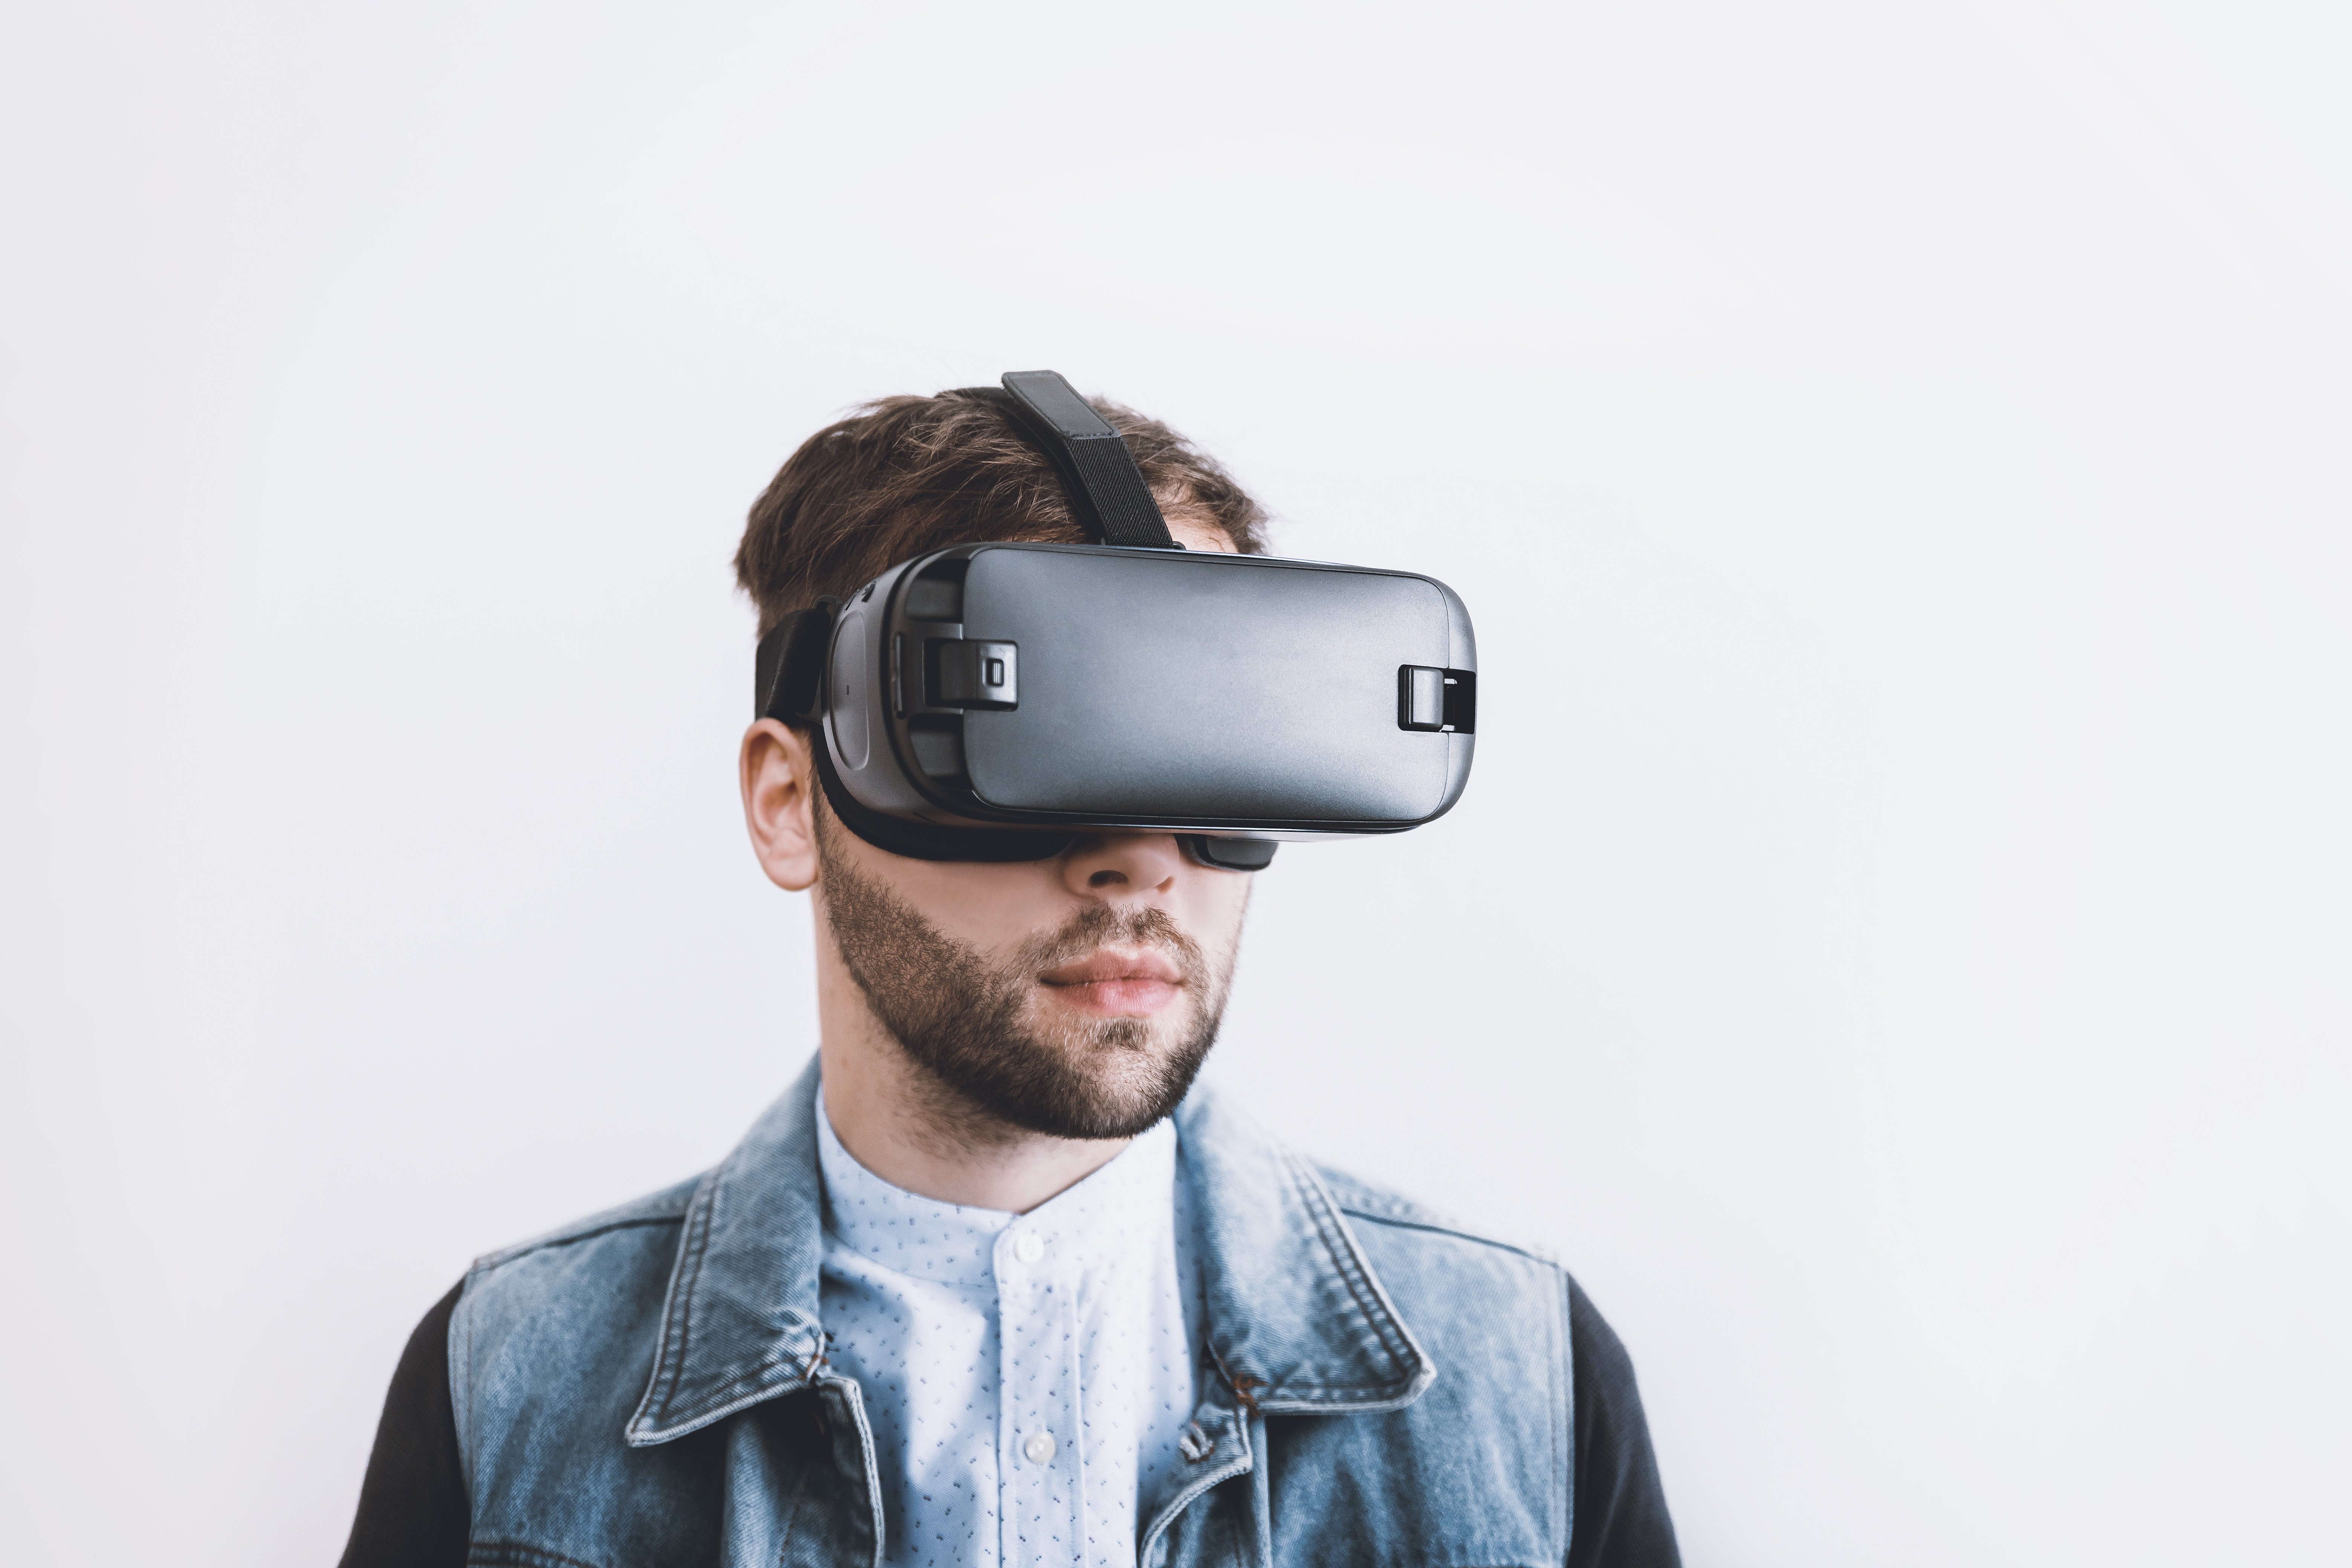 Эпл виар очки. Виртуальная реальность (Virtual reality, VR). Apple ar VR. Очки виртуальной реальности на человеке. Человек в шлеме виртуальной реальности.